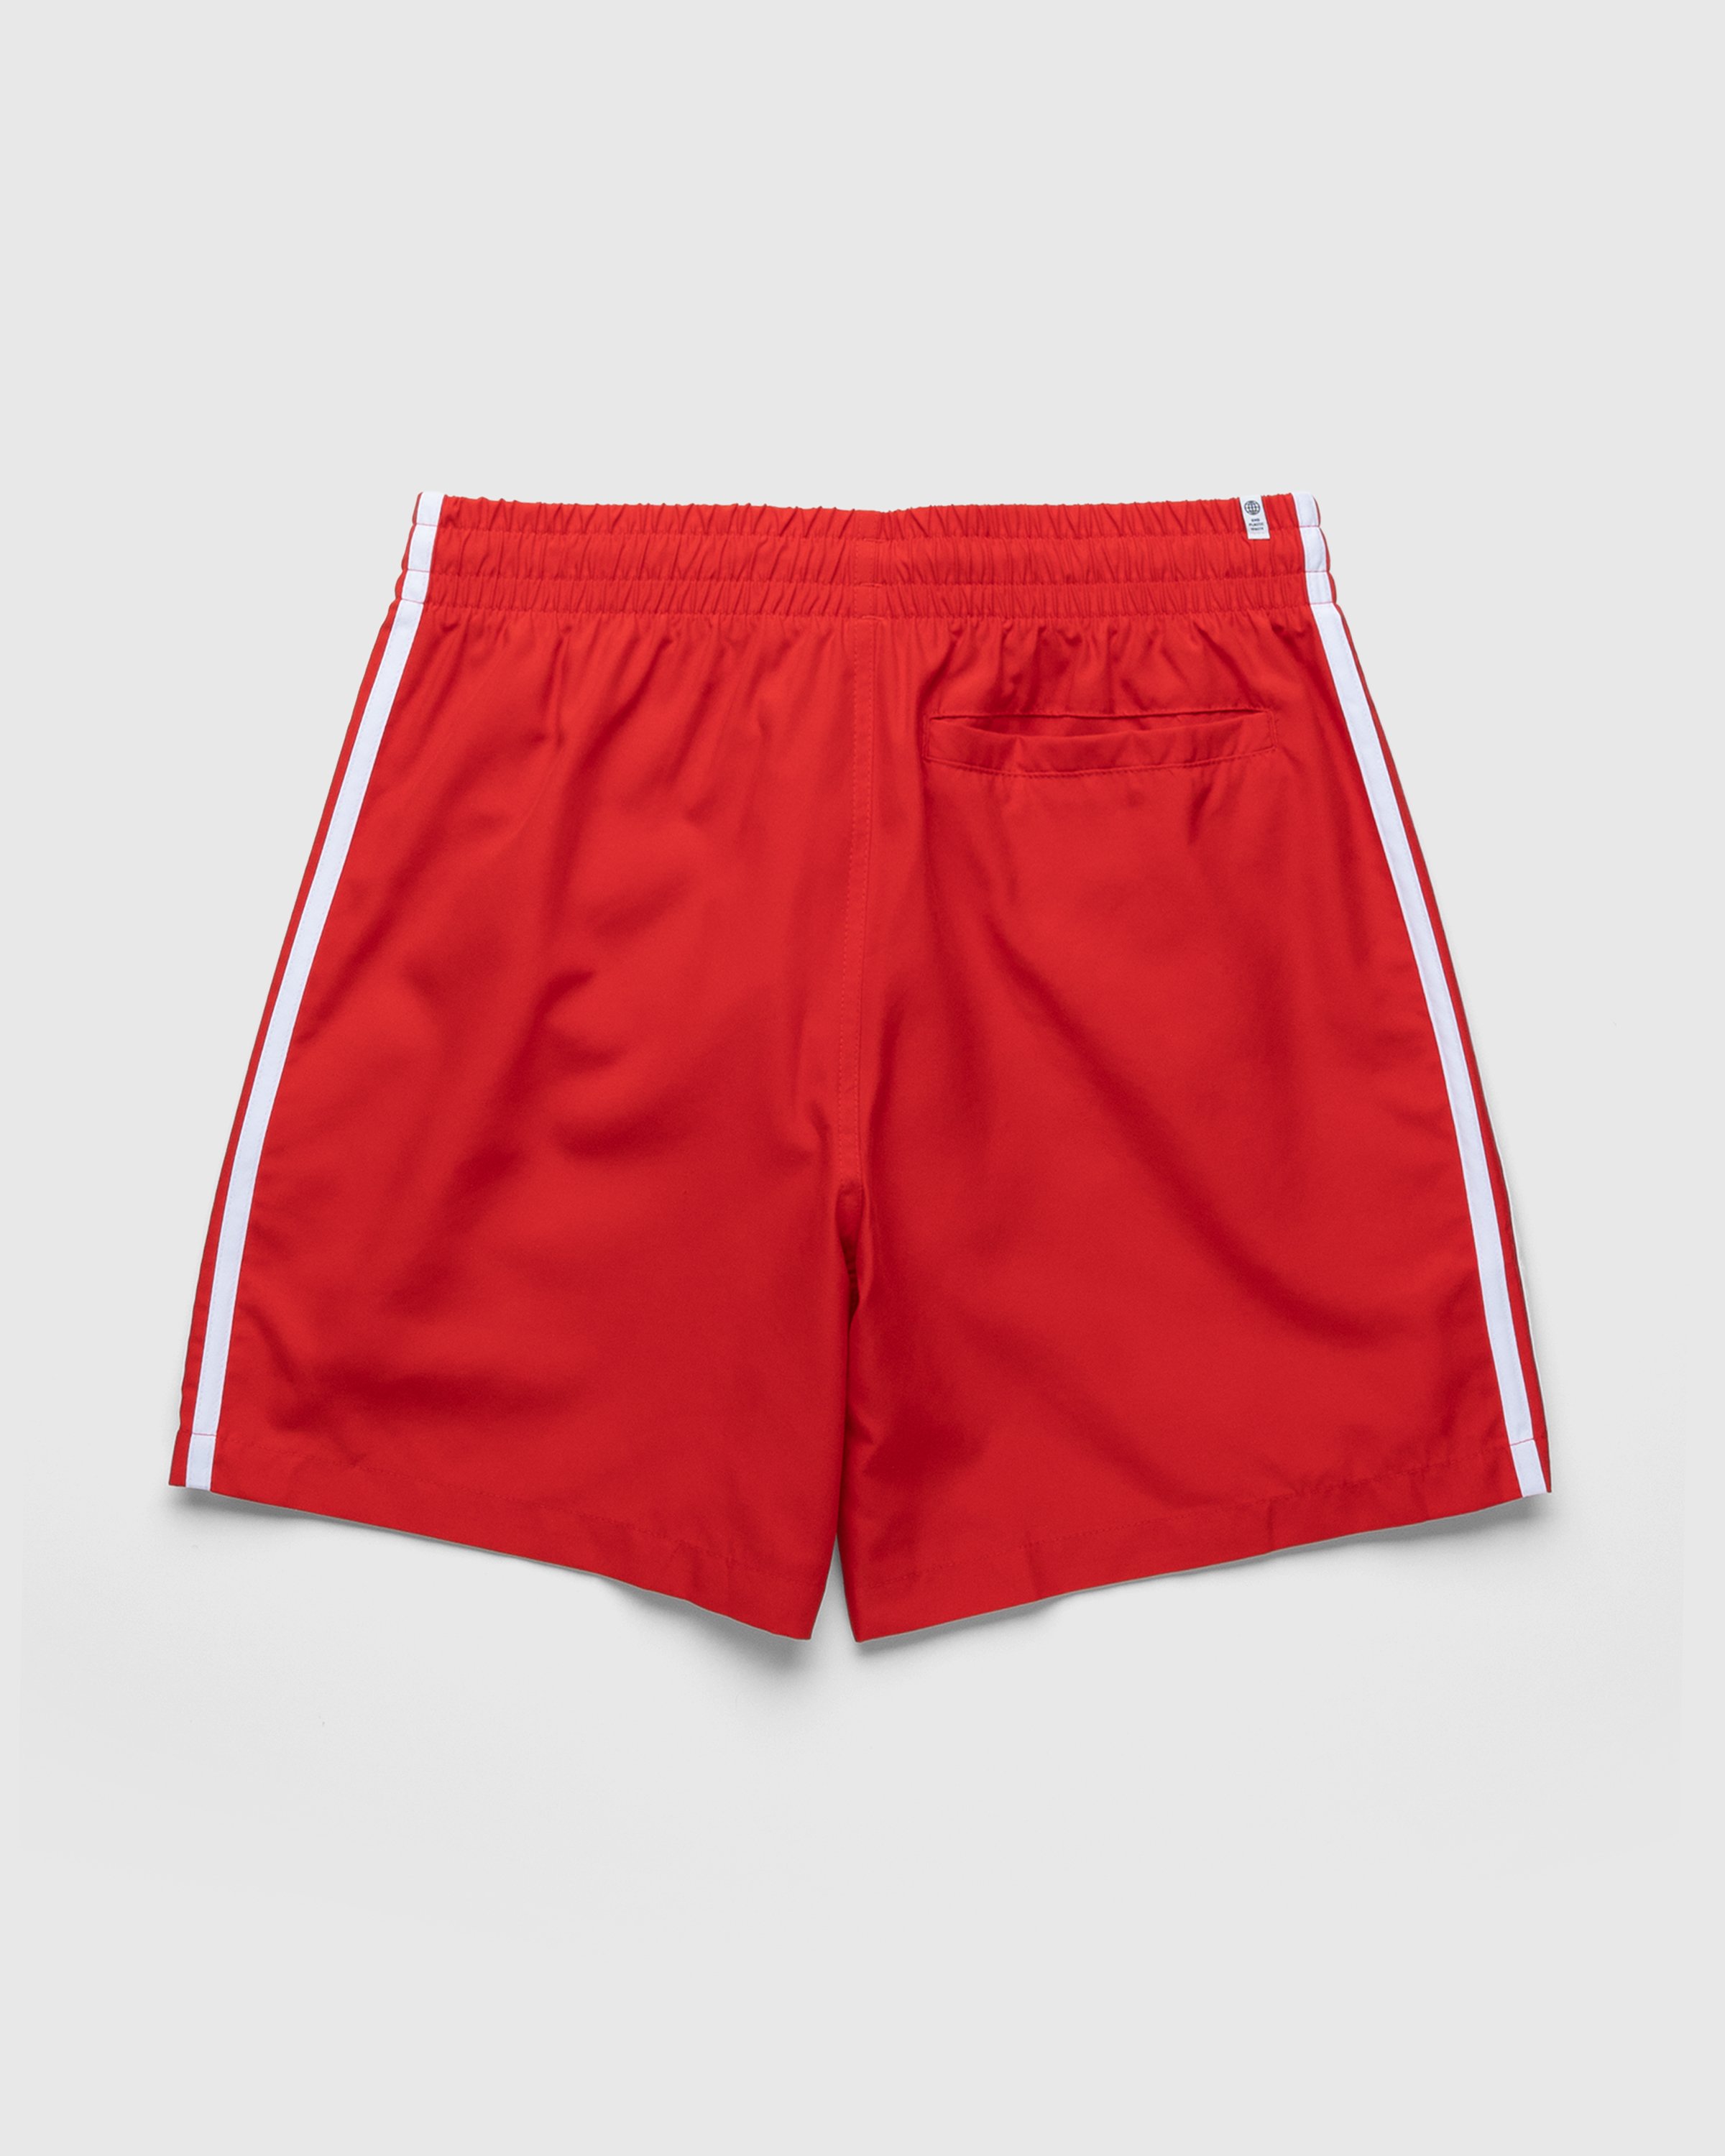 Adidas - Classic 3-Stripes Swim Shorts Vivid Red - Clothing - Red - Image 2